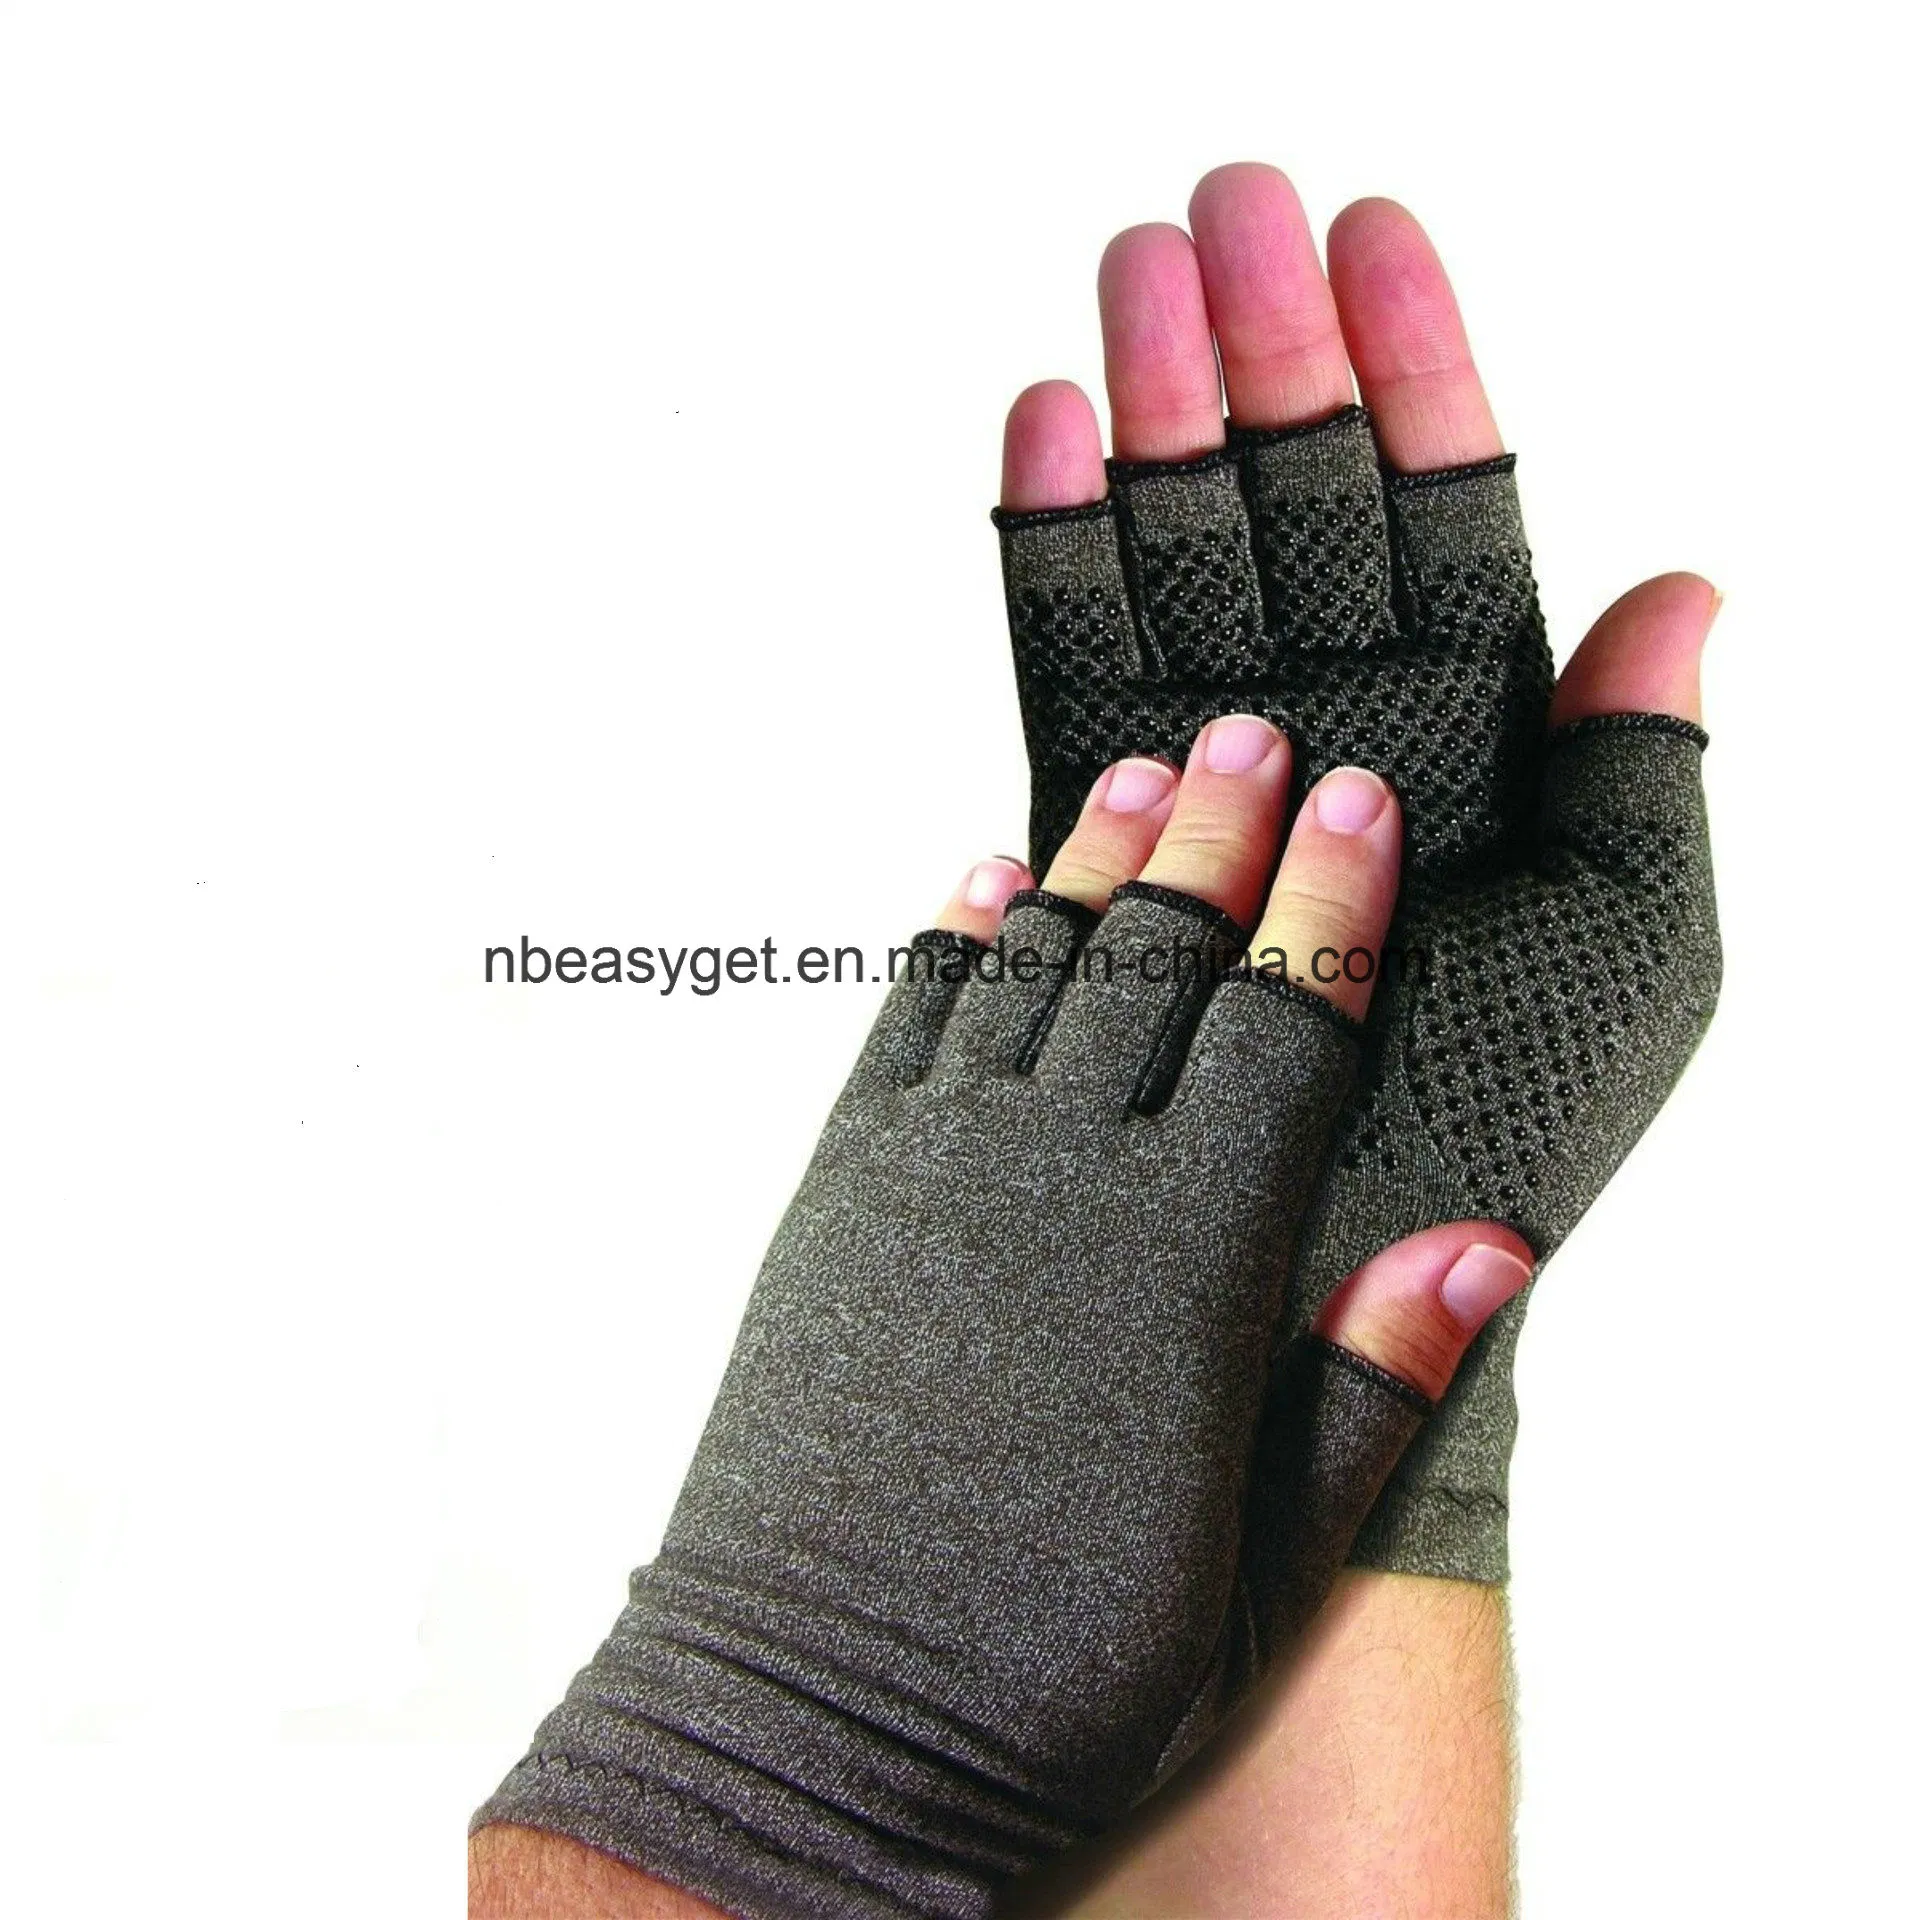 Arthritis Gloves Compression Gloves for Rheumatoid & Osteoarthritis - Hand Gloves Provide Arthritic Joint Pain Symptom Relief - Men & Women Esg10632